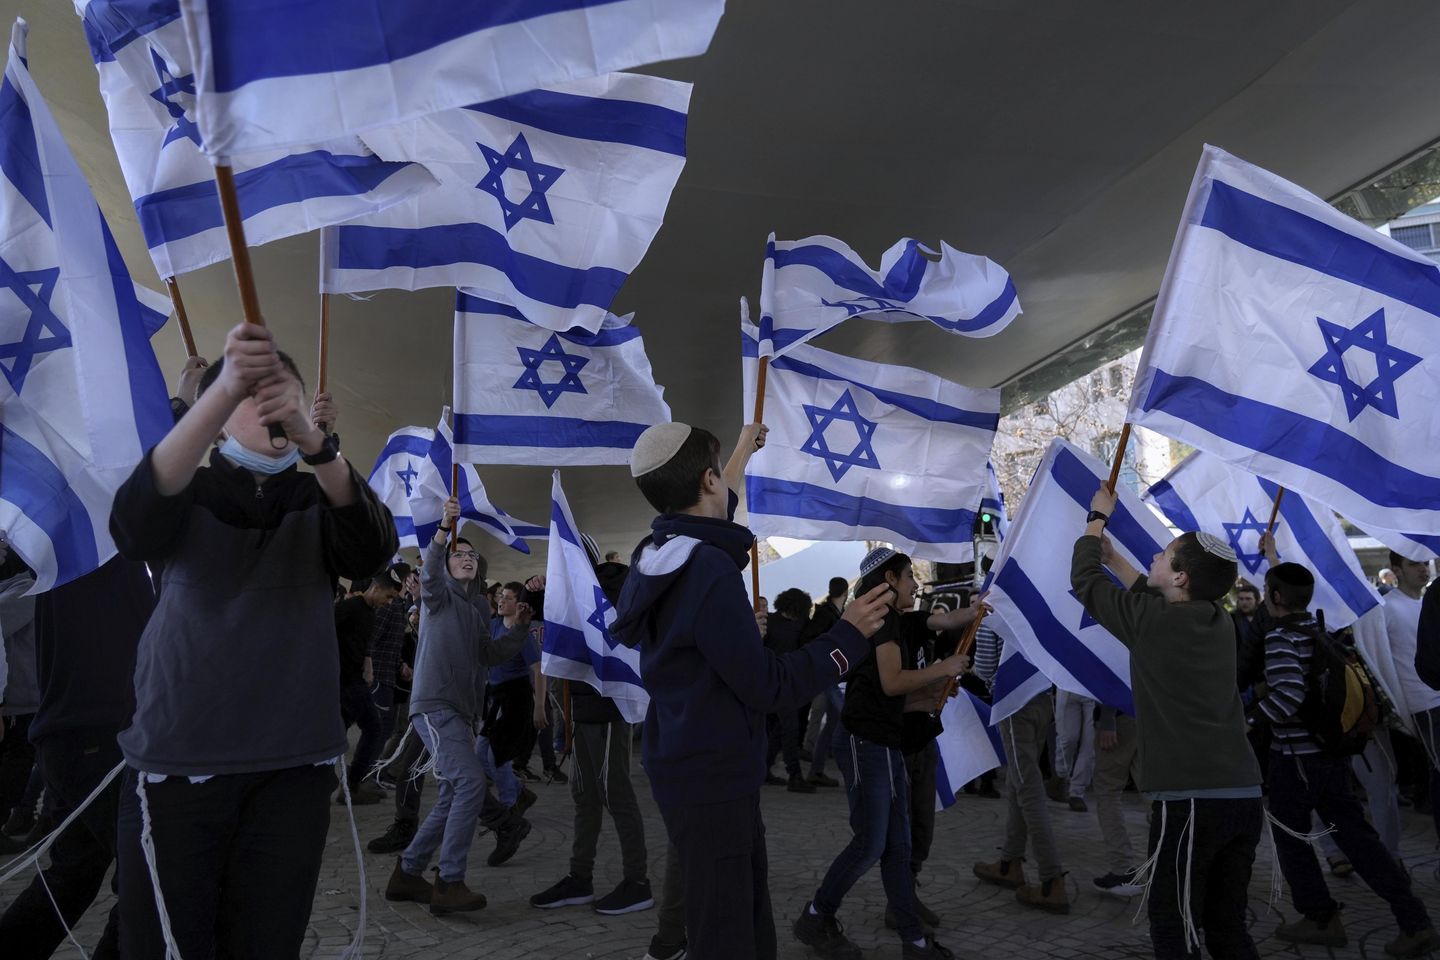 Palestinians, Israelis both gain in Americans' esteem, survey finds